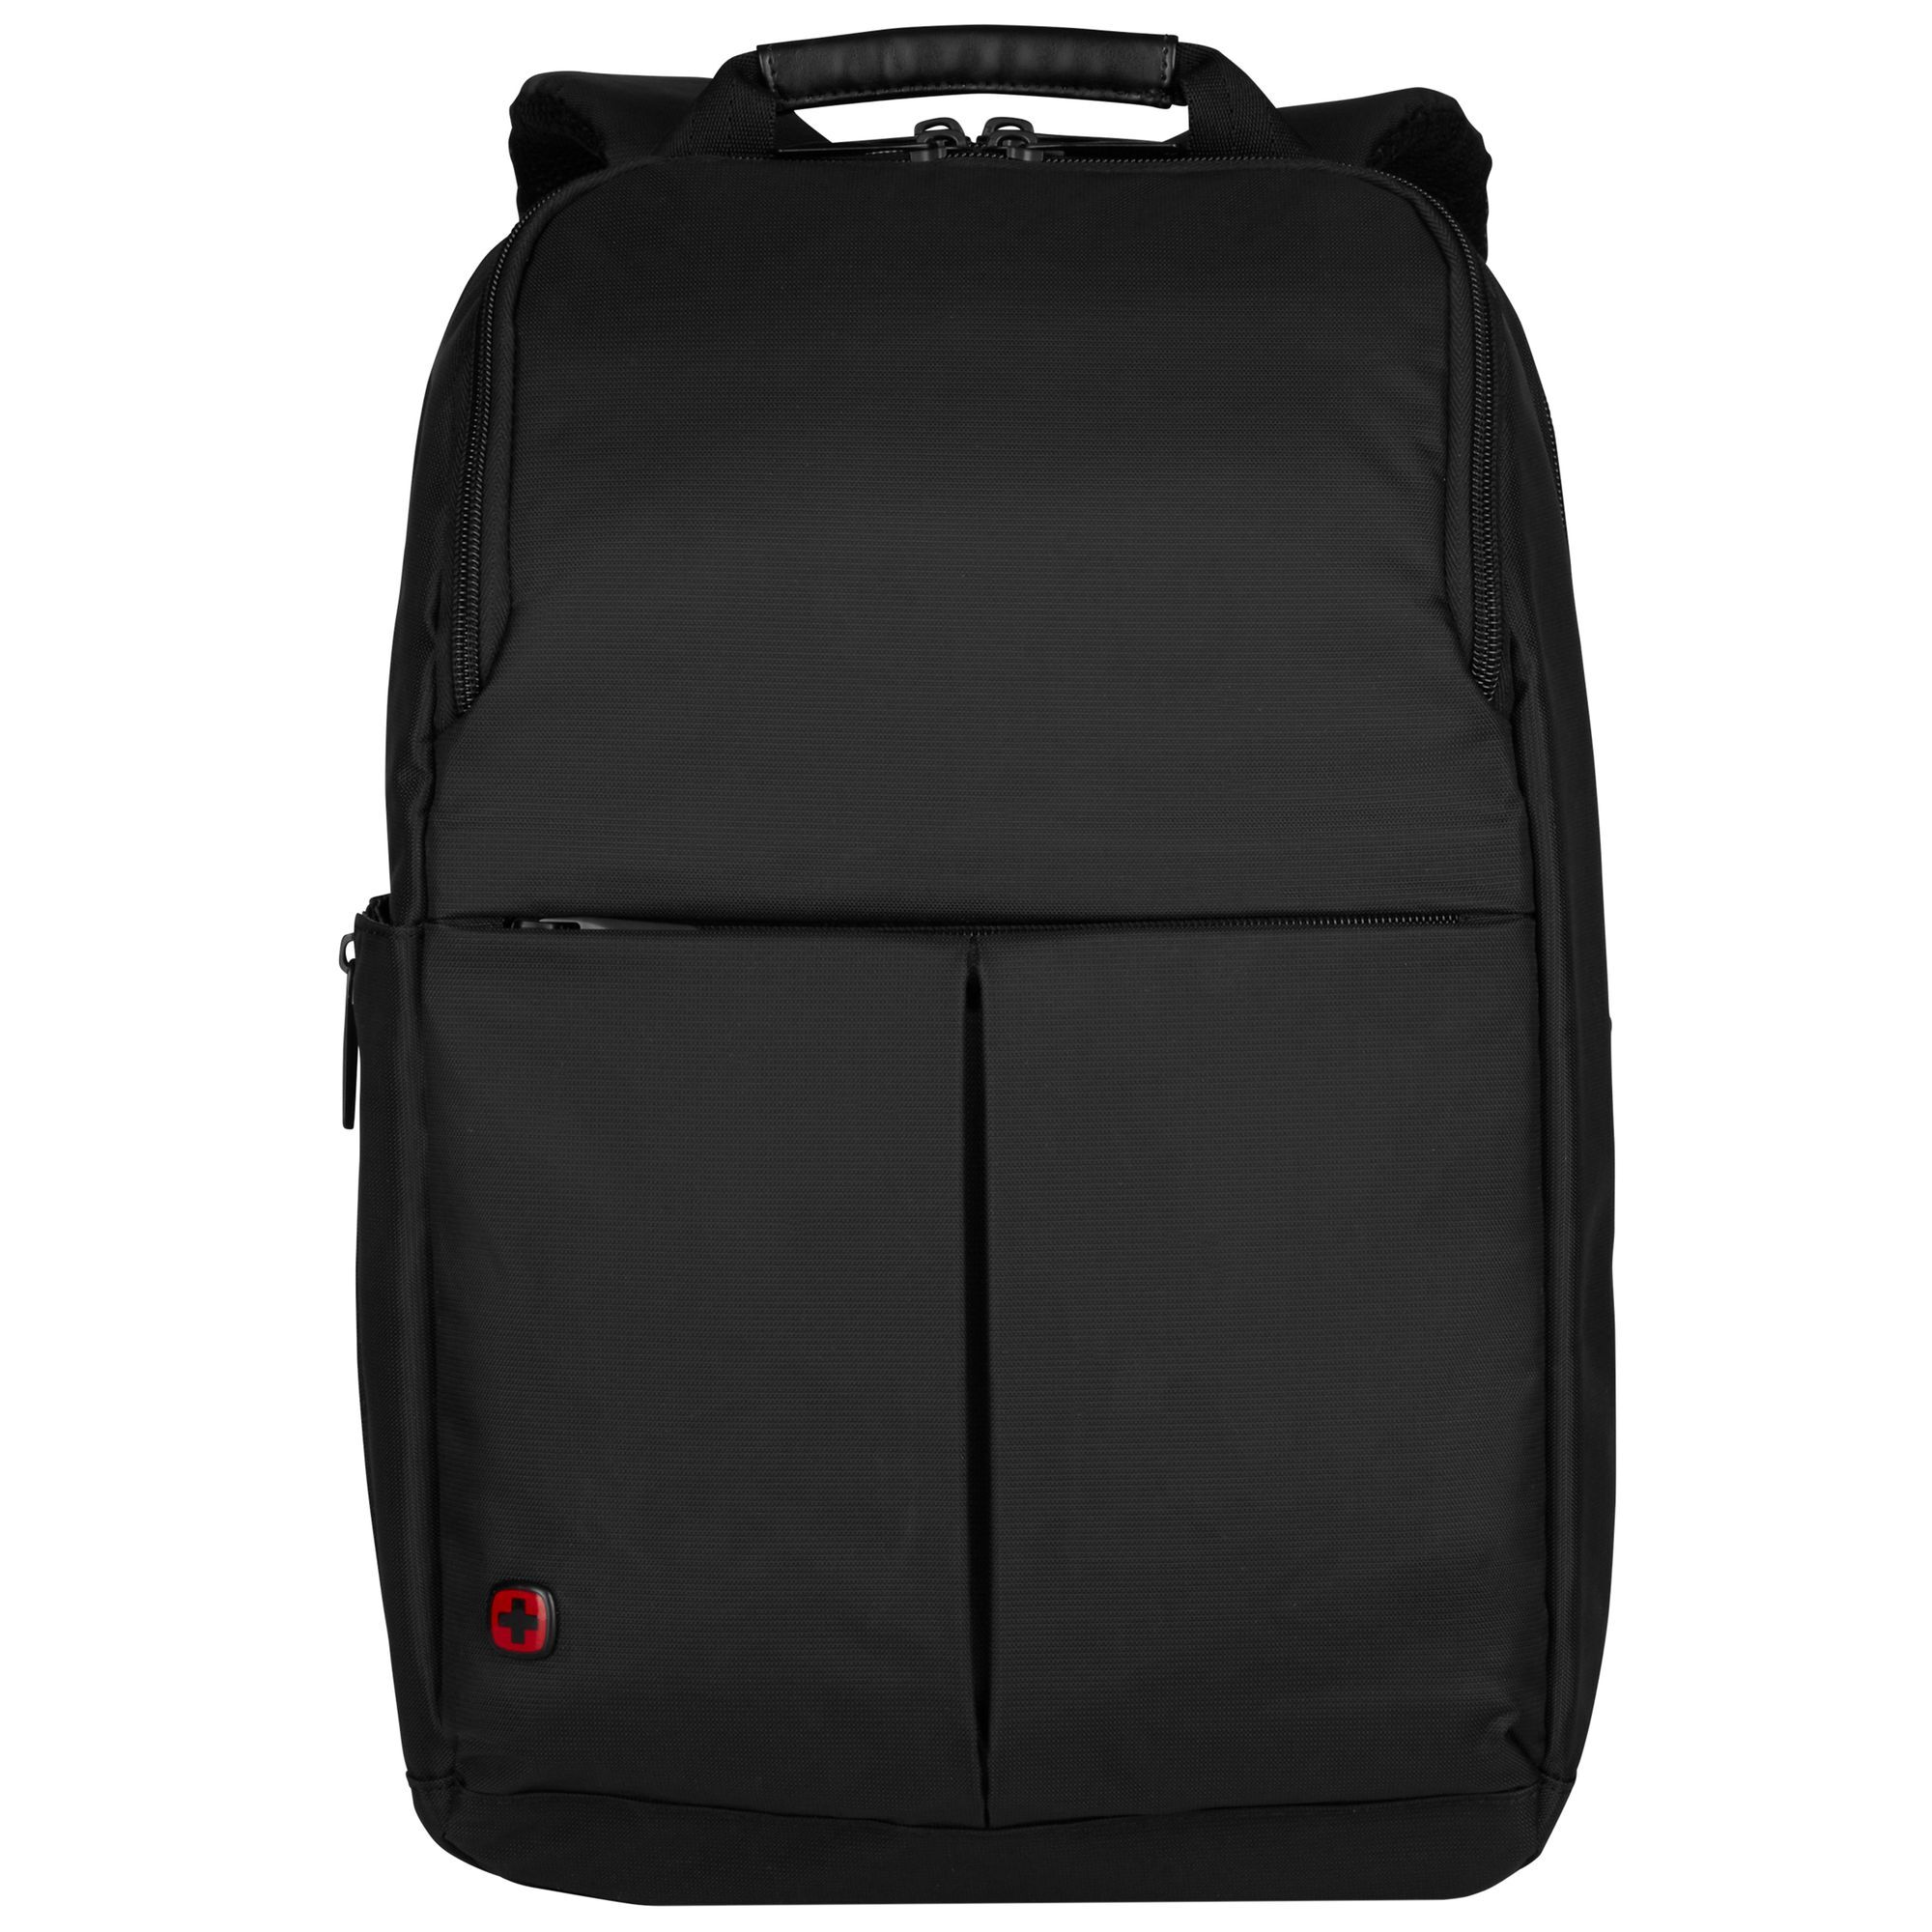 Рюкзак Wenger Reload 14 42 cm Laptopfach, черный рюкзак wenger trayl 45 cm laptopfach цвет gravity black